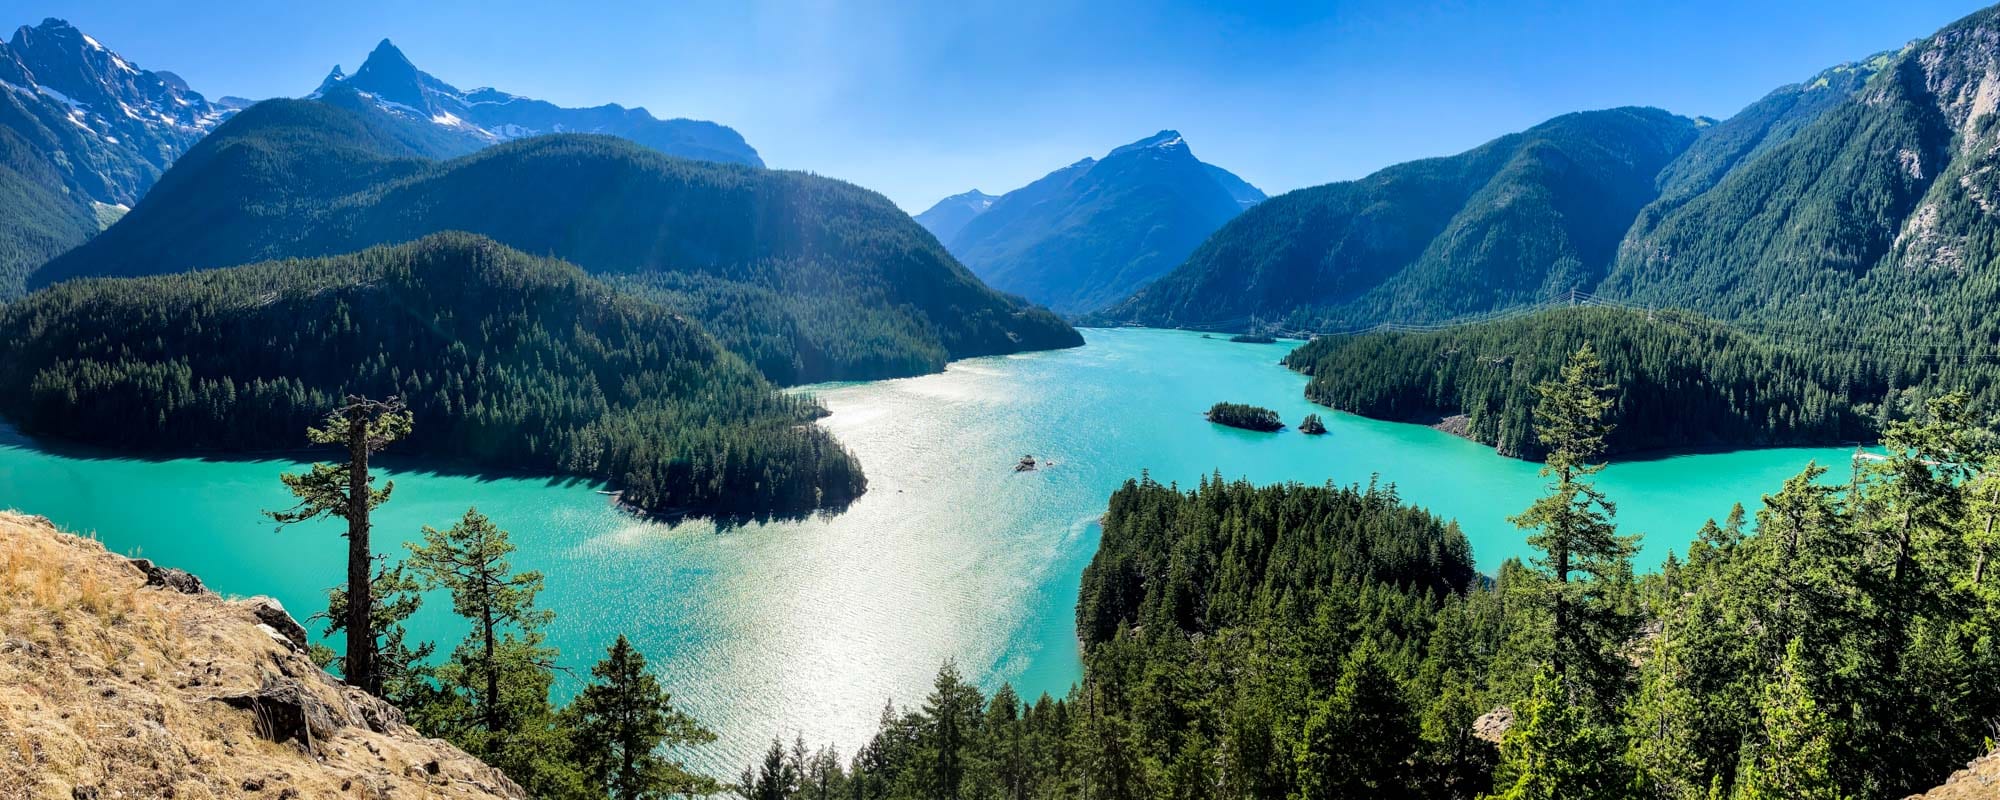 North Cascades National Park, Washington - Banner Diablo Lake